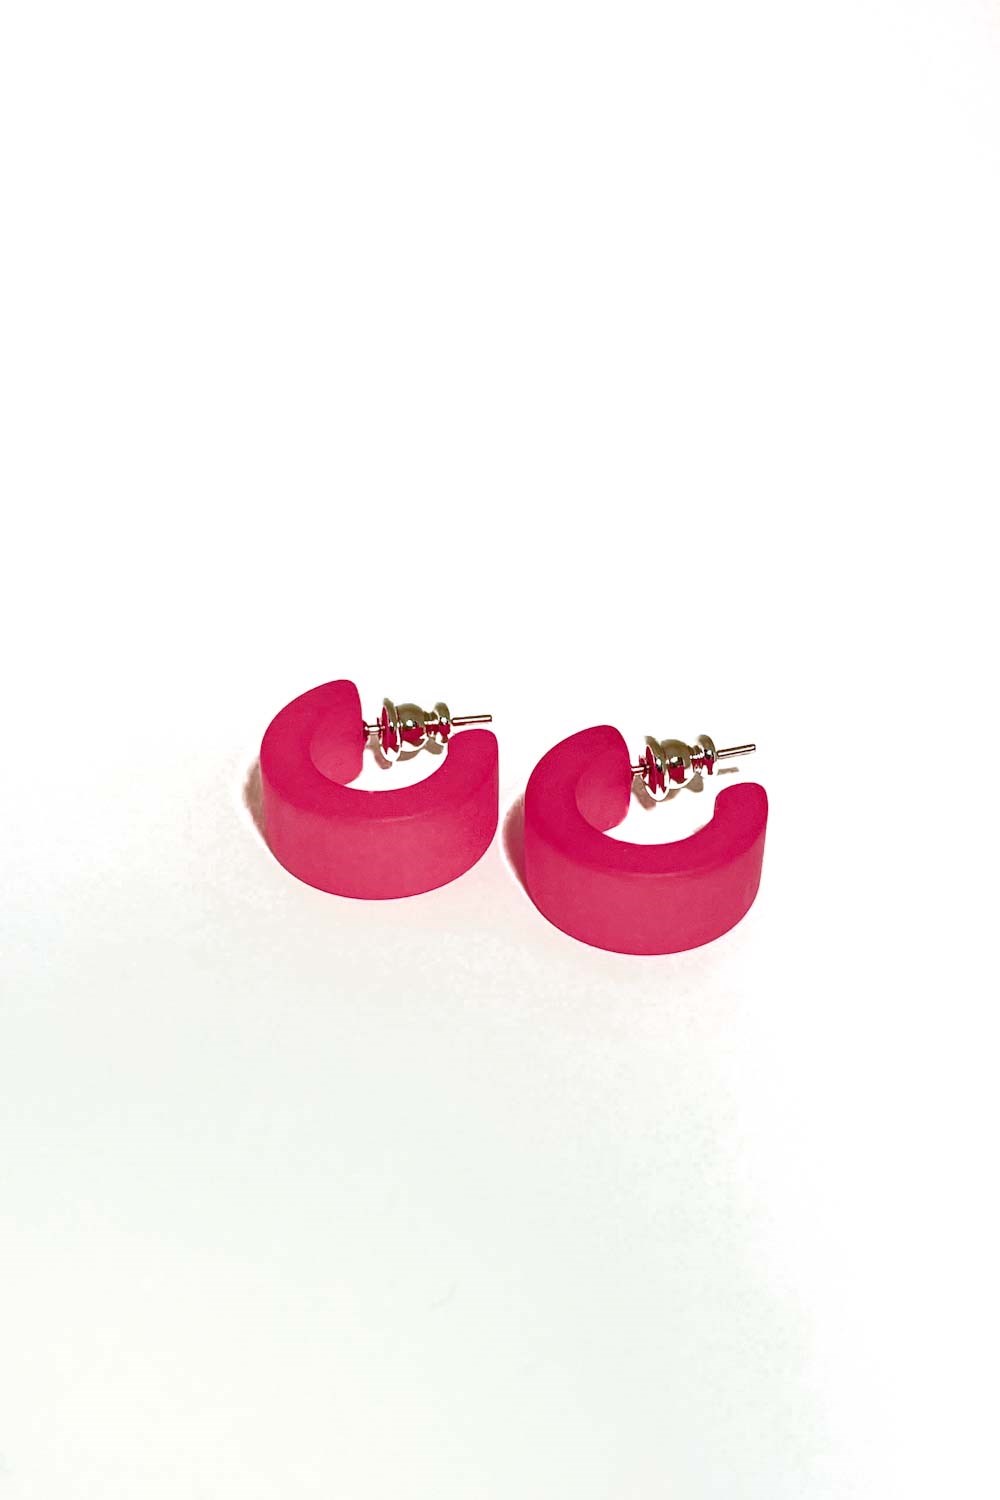 Earrings resin 60s style pink